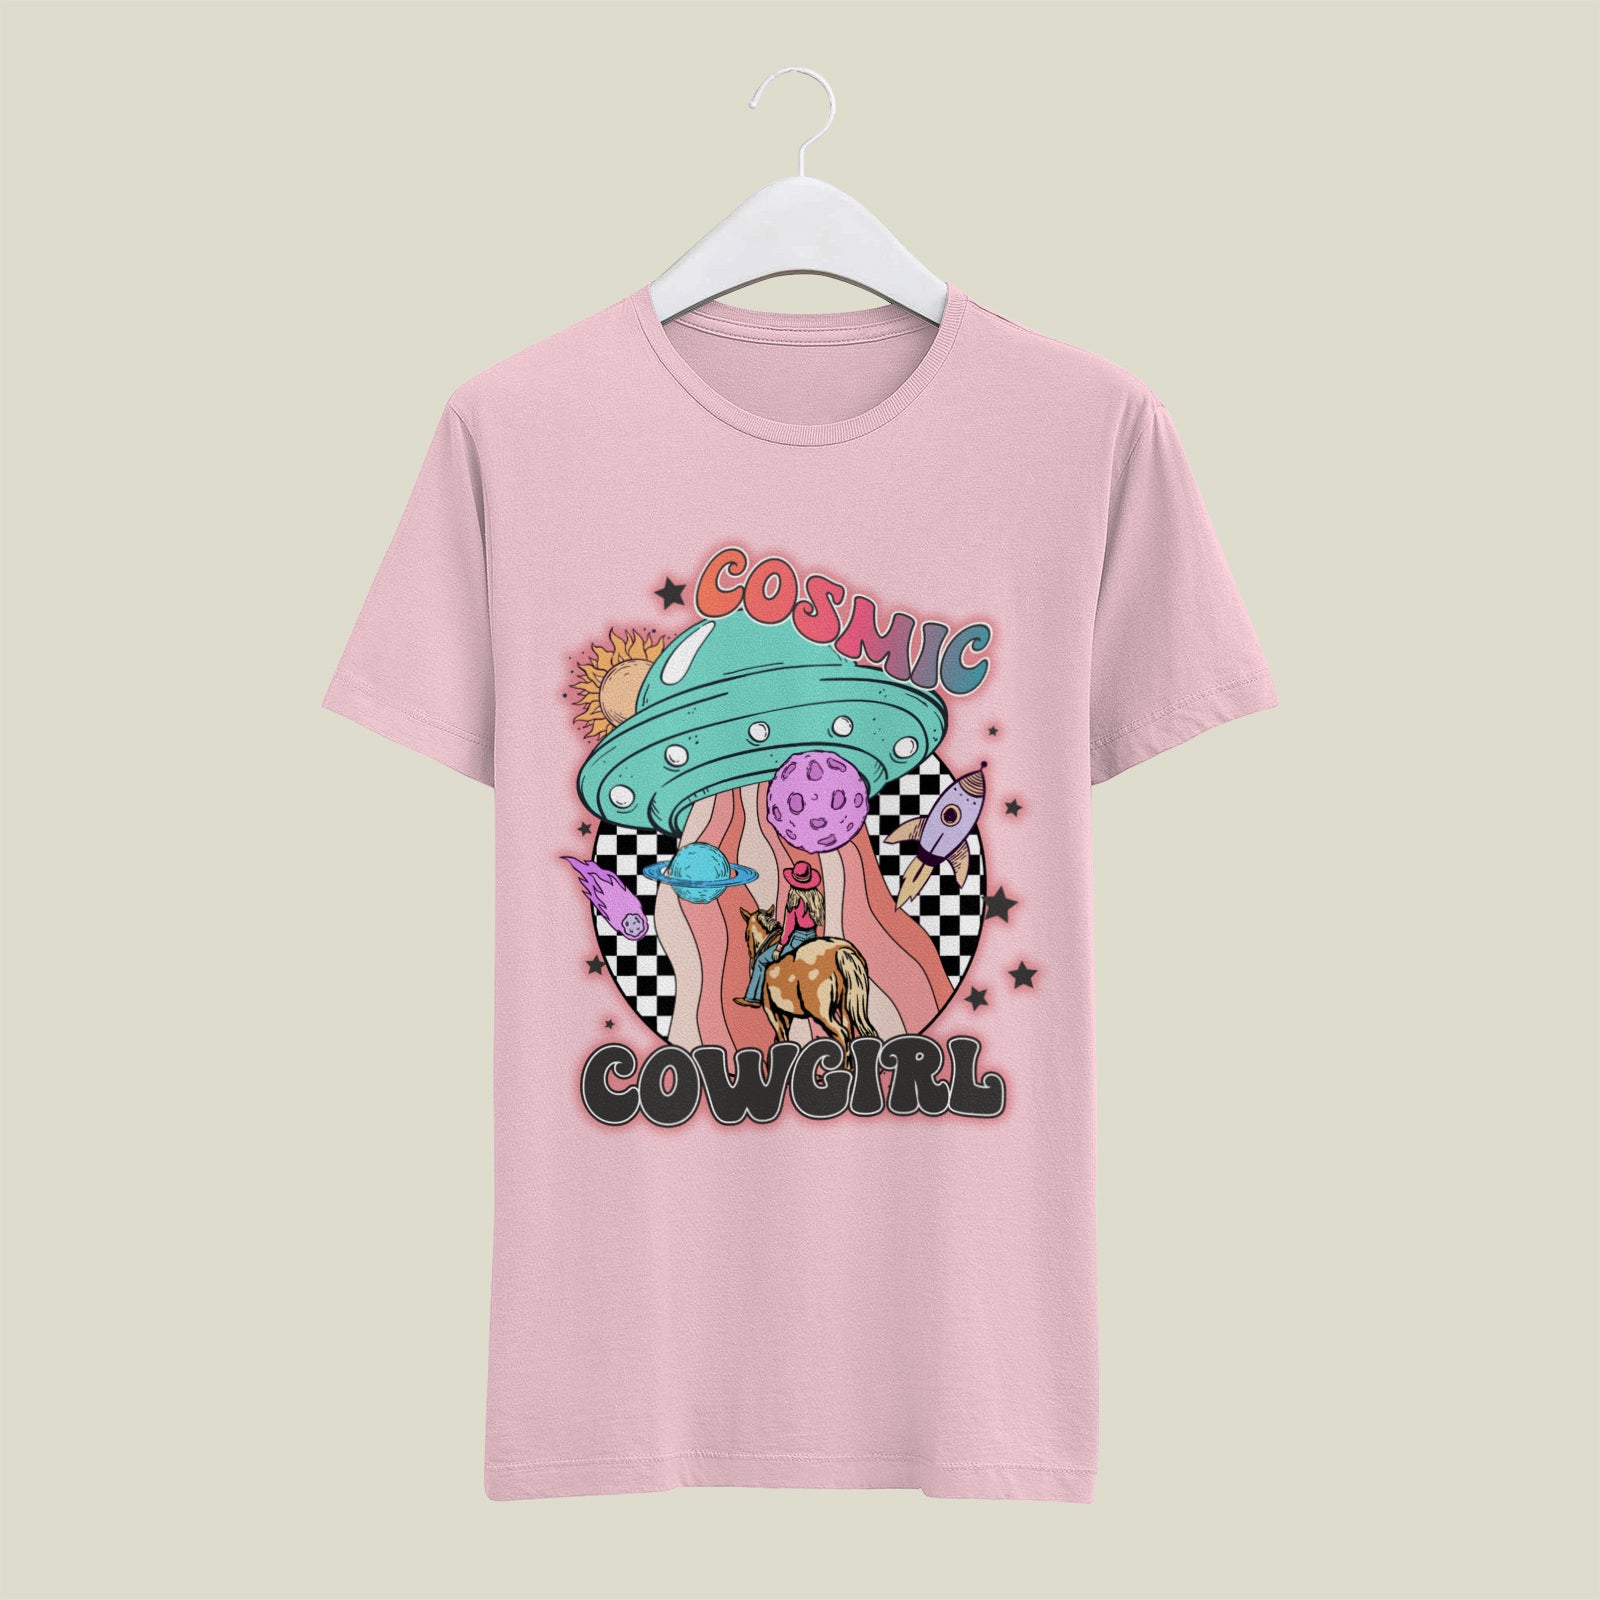 Cosmic Cowgirl T-Shirt